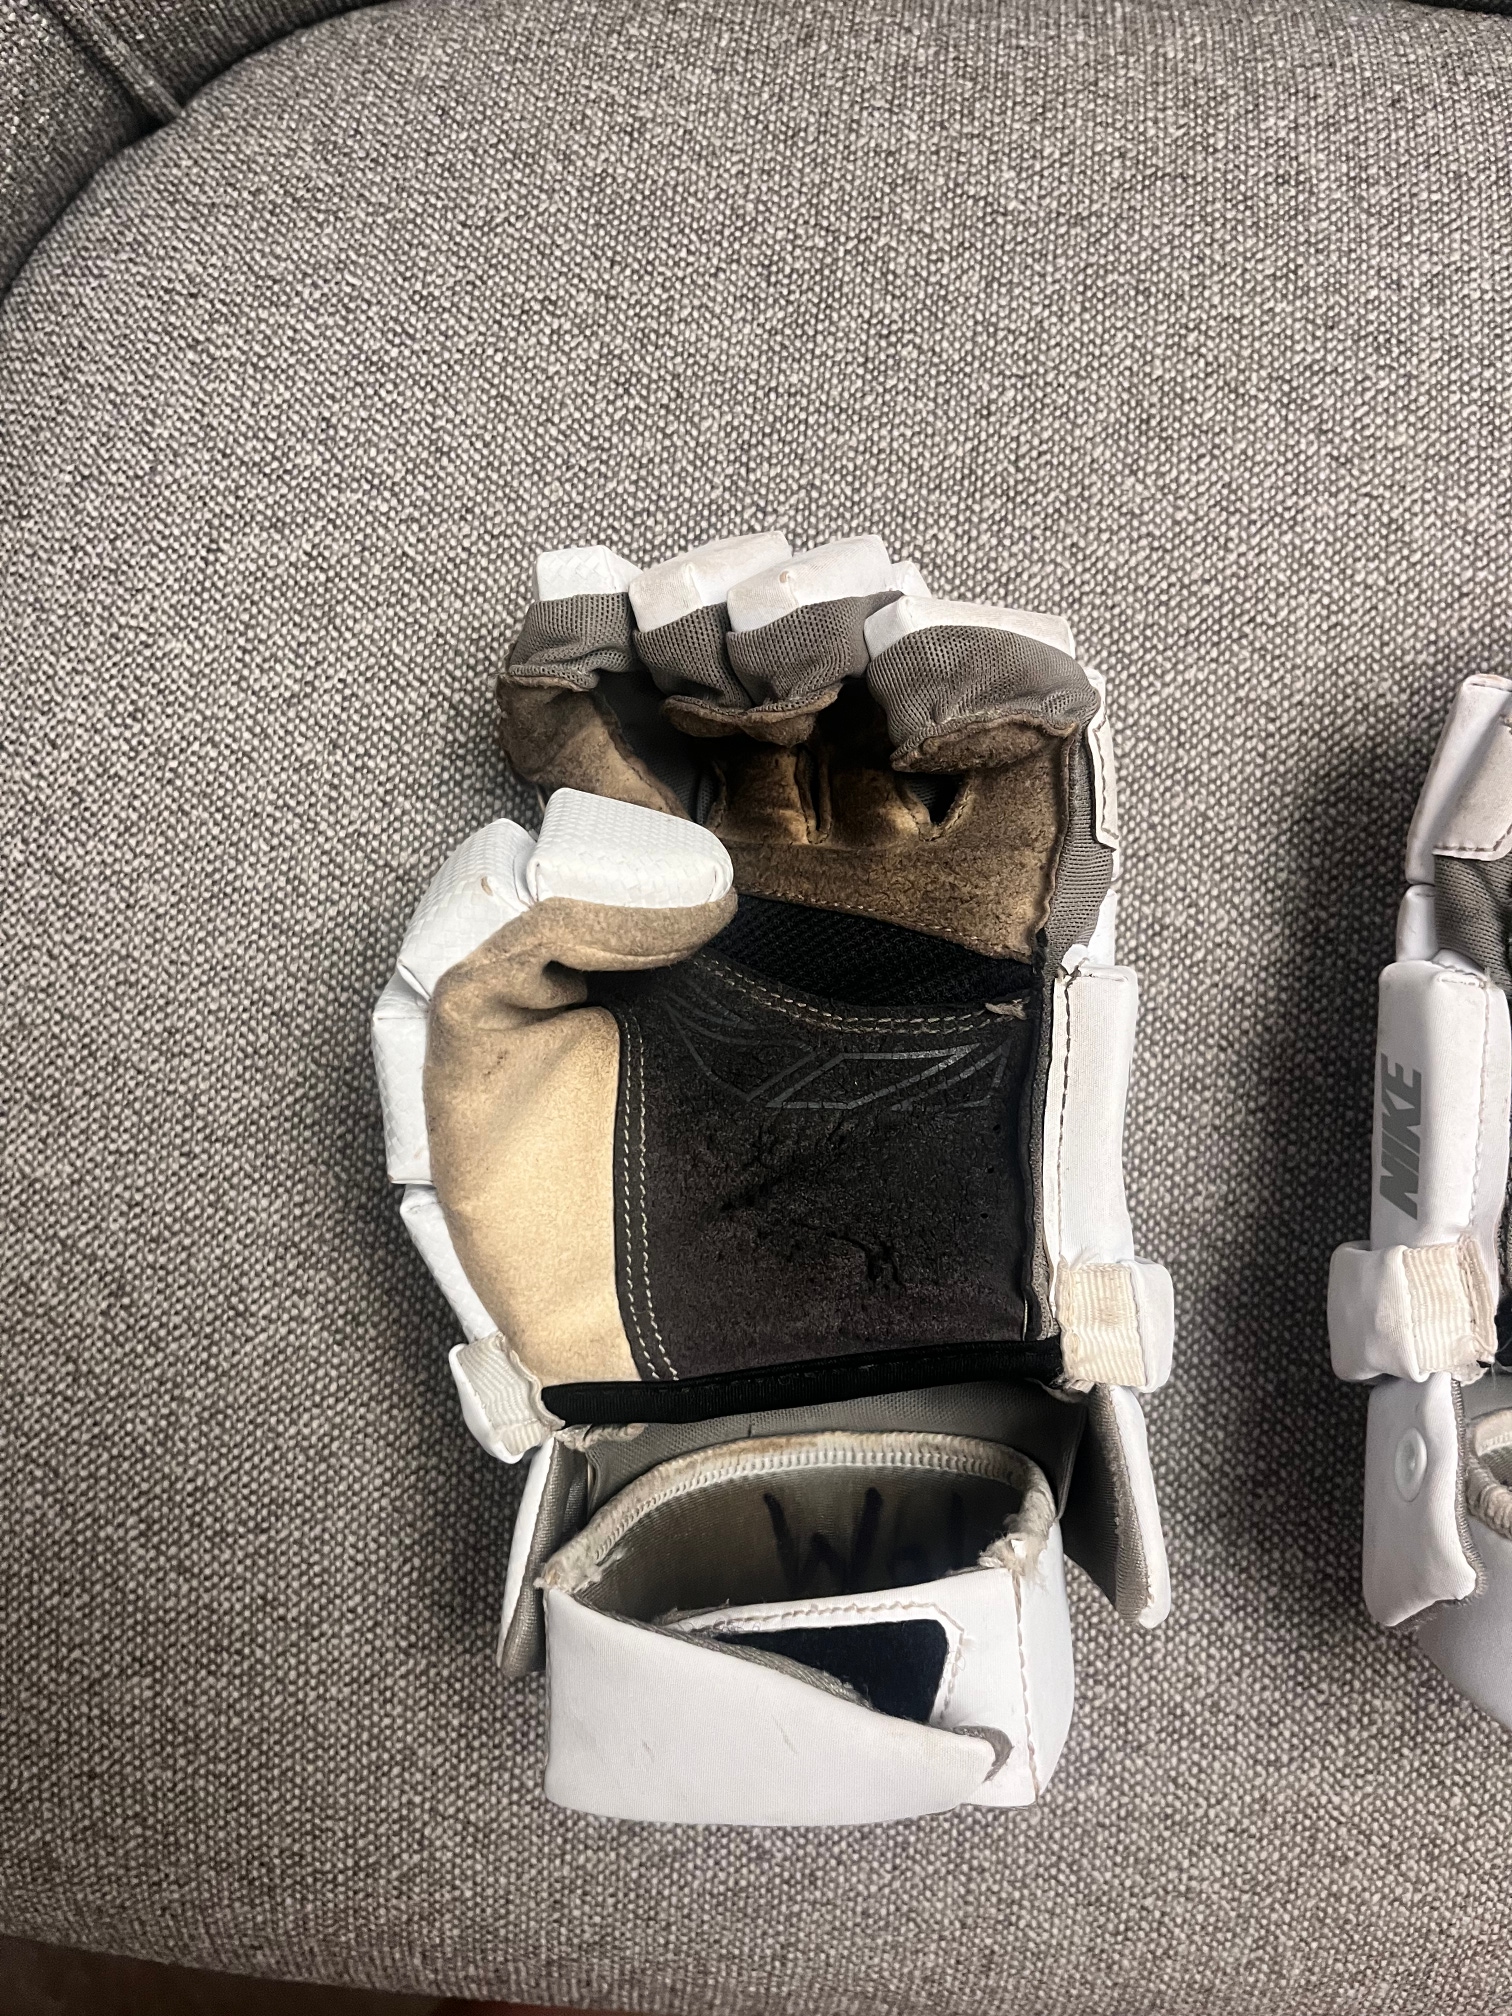 Used Player's Nike Vapor Lacrosse Gloves Medium